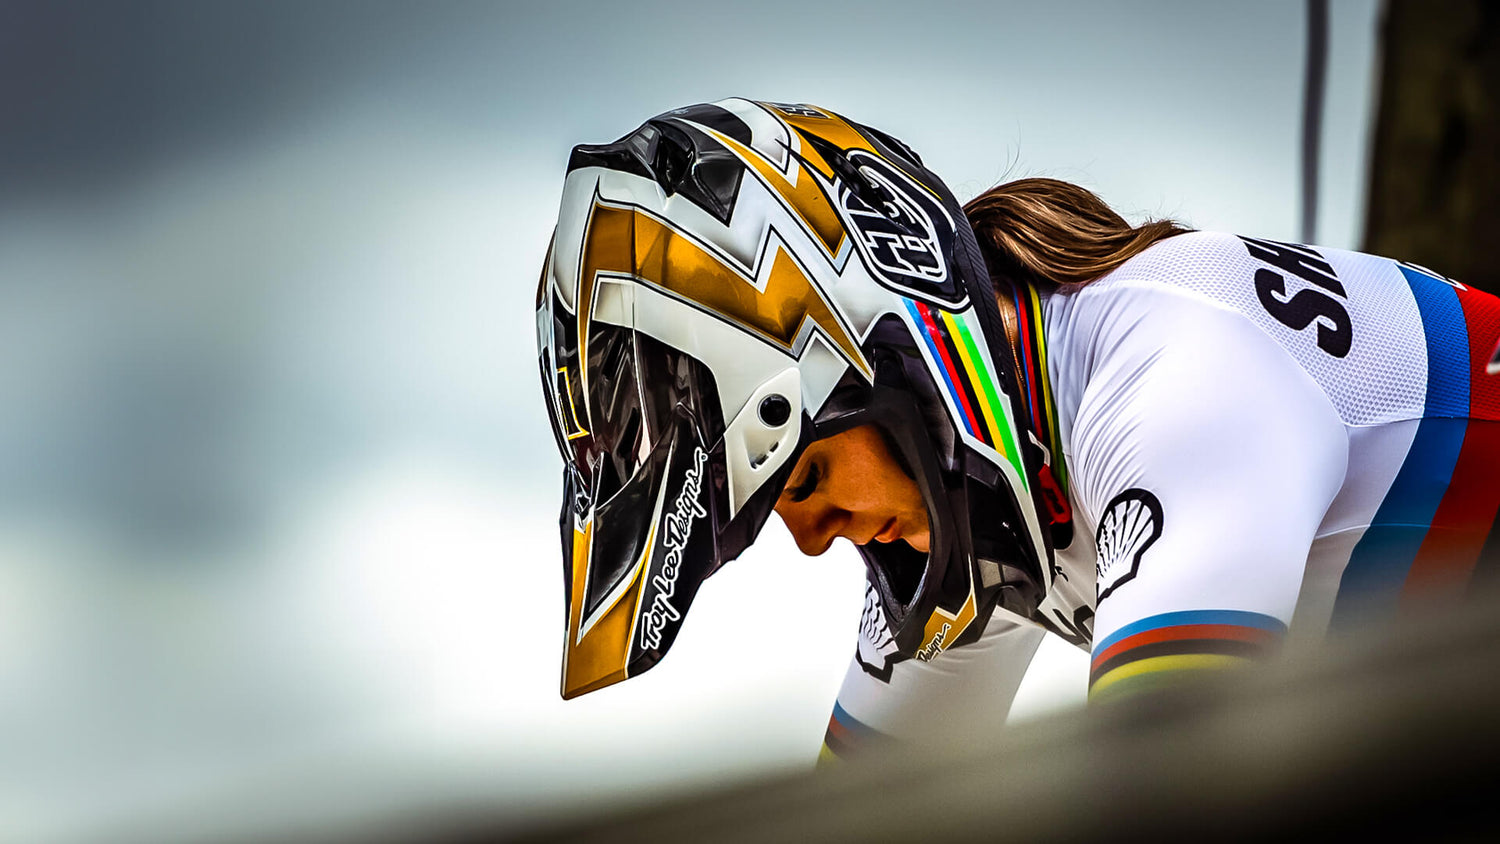 BMX rider focusing on their Troy Lee Designs D4 Helmet